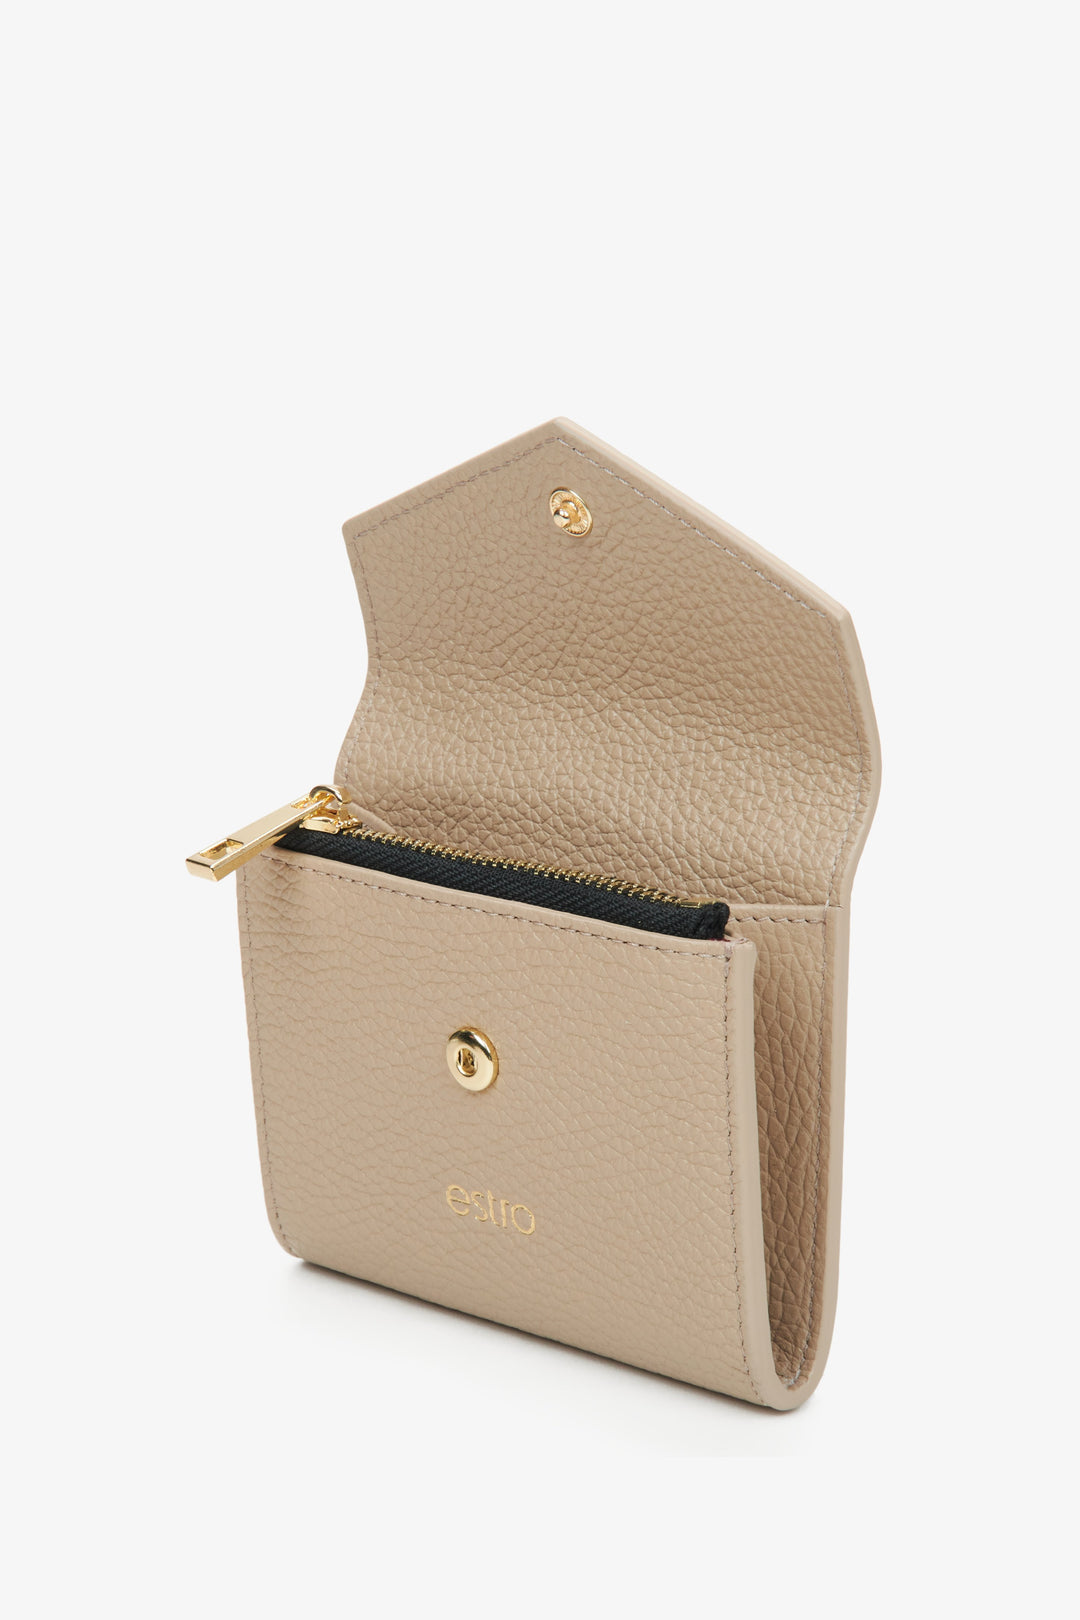 Estro beige leather women's wallet - presentation of the model when opened.